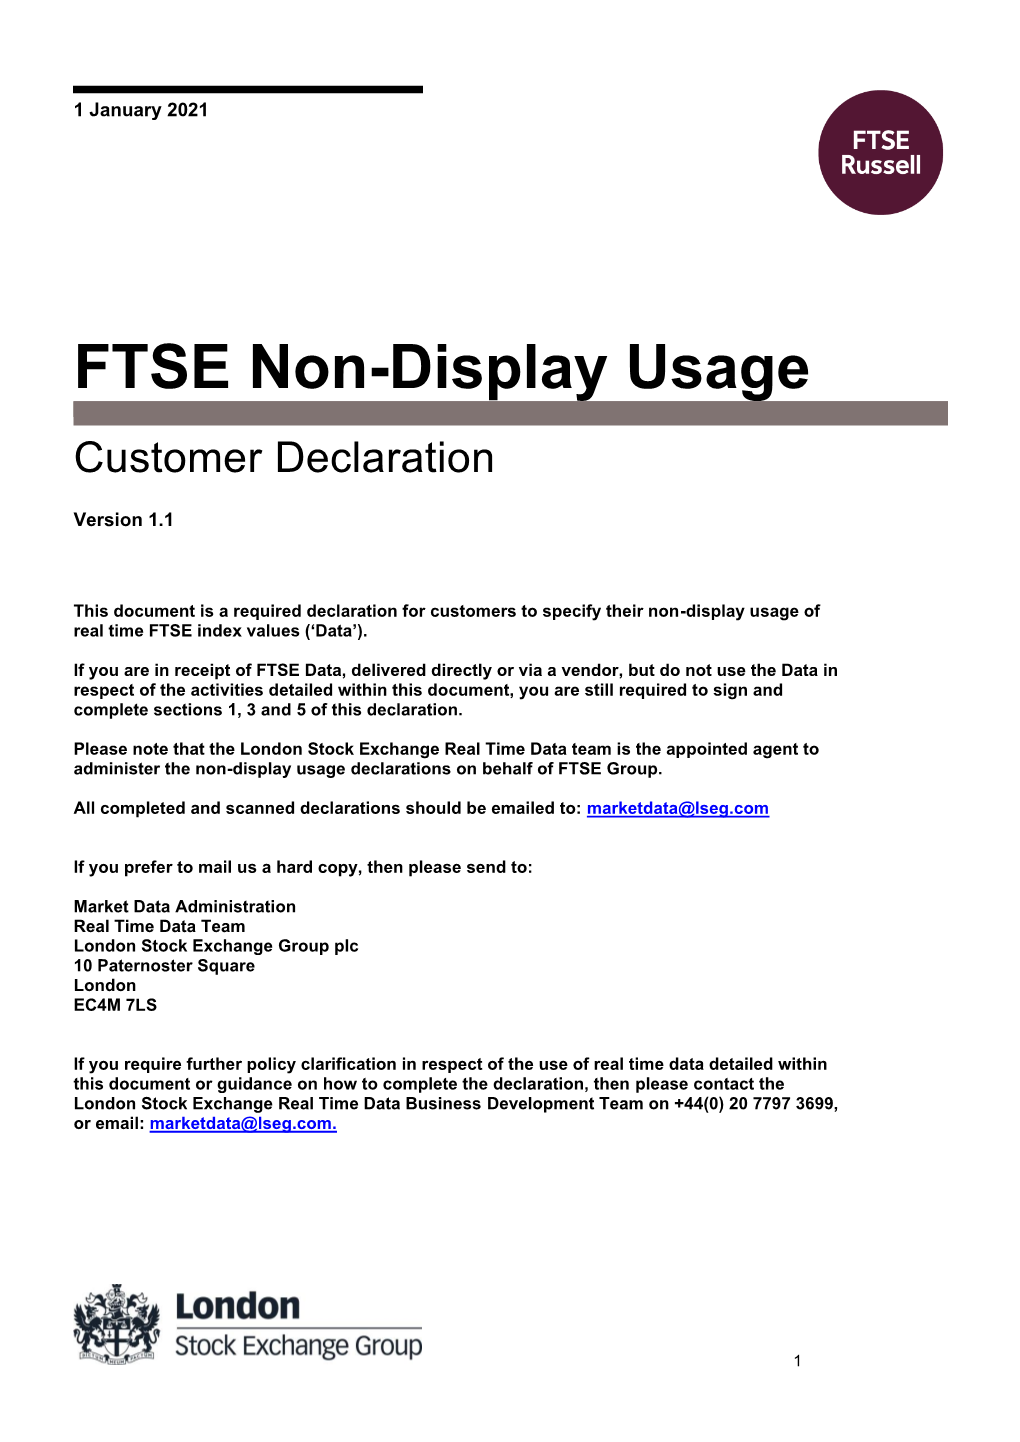 FTSE Non-Display Usage